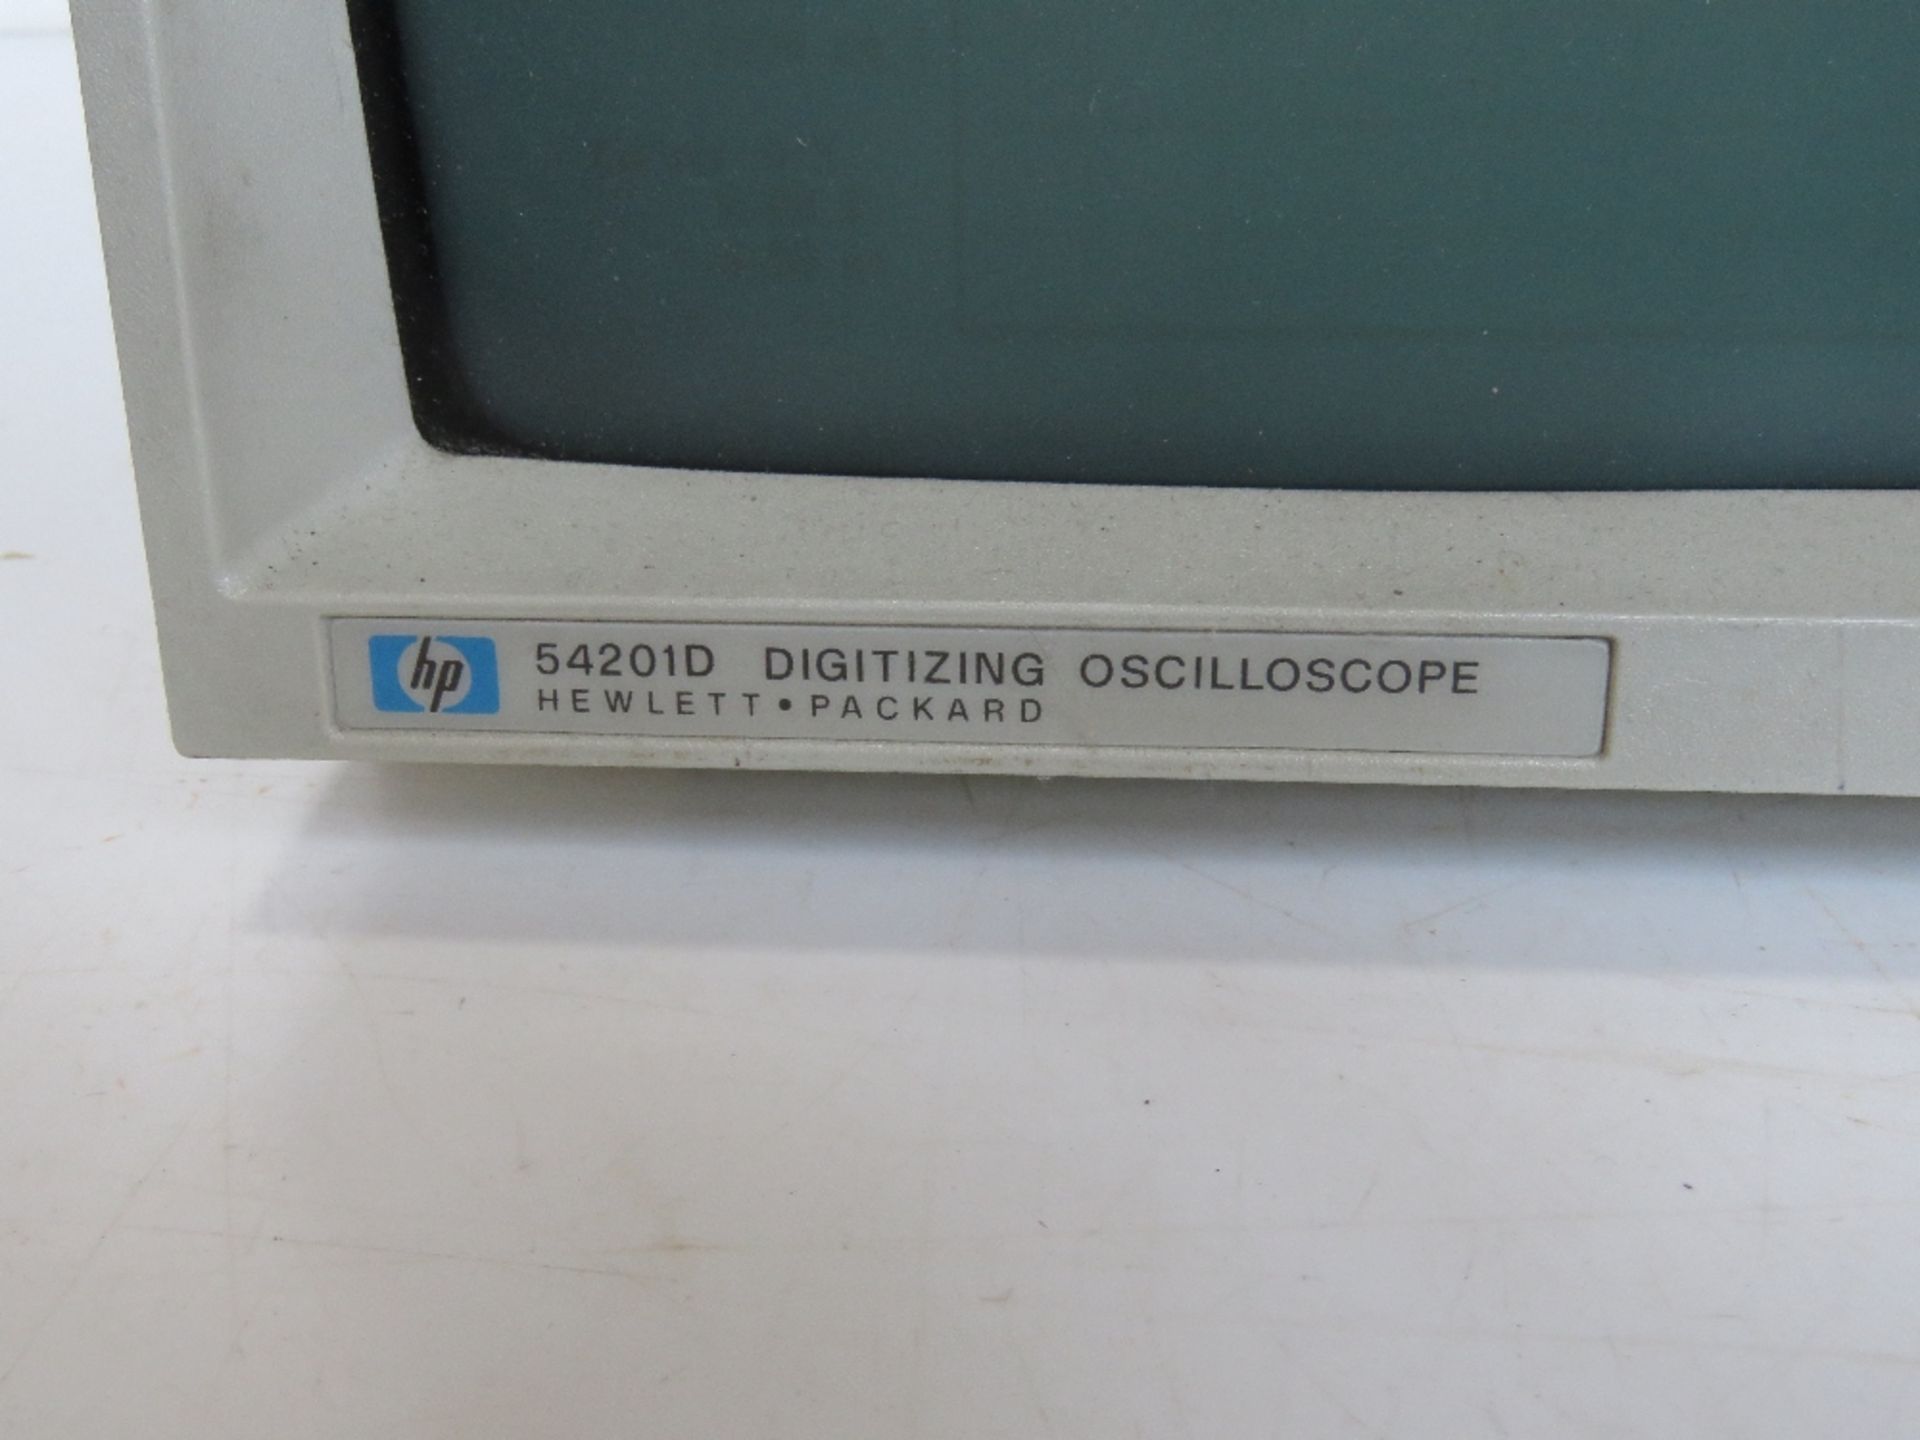 A HP 54201D Digitizing Oscilloscope. - Image 2 of 2